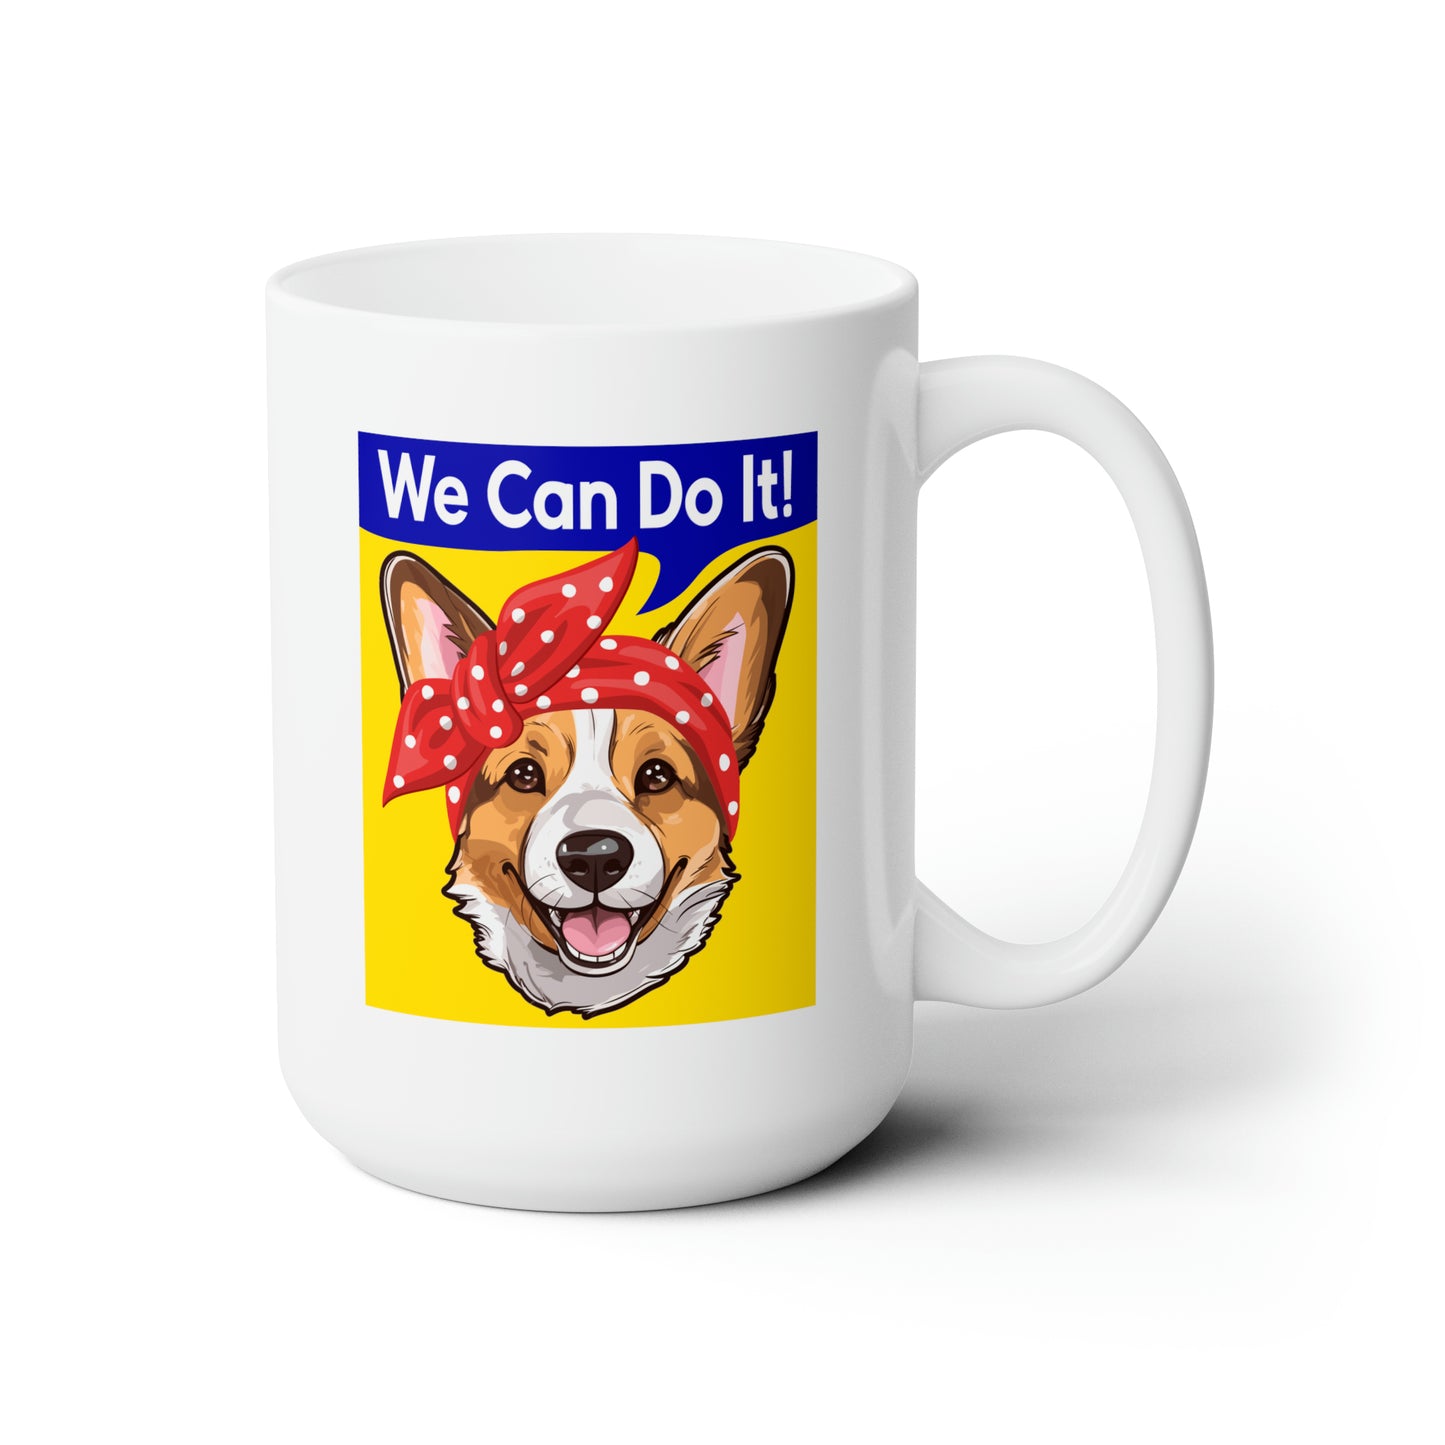 Corgi Cup Rosie the Riveter Feminist Coffee Mug 15oz